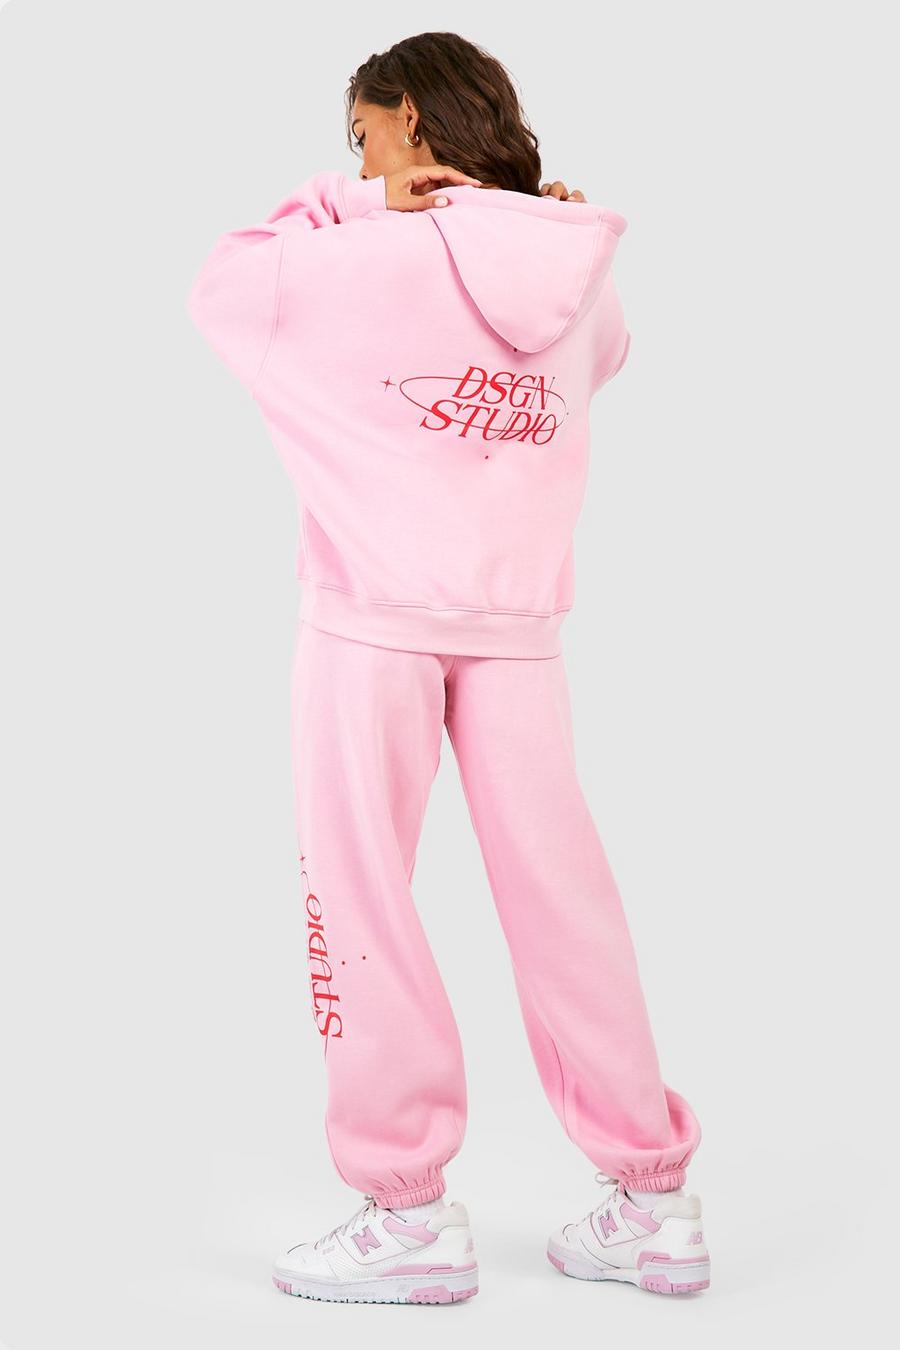 Chándal con capucha y eslogan Dsgn Studio, Light pink